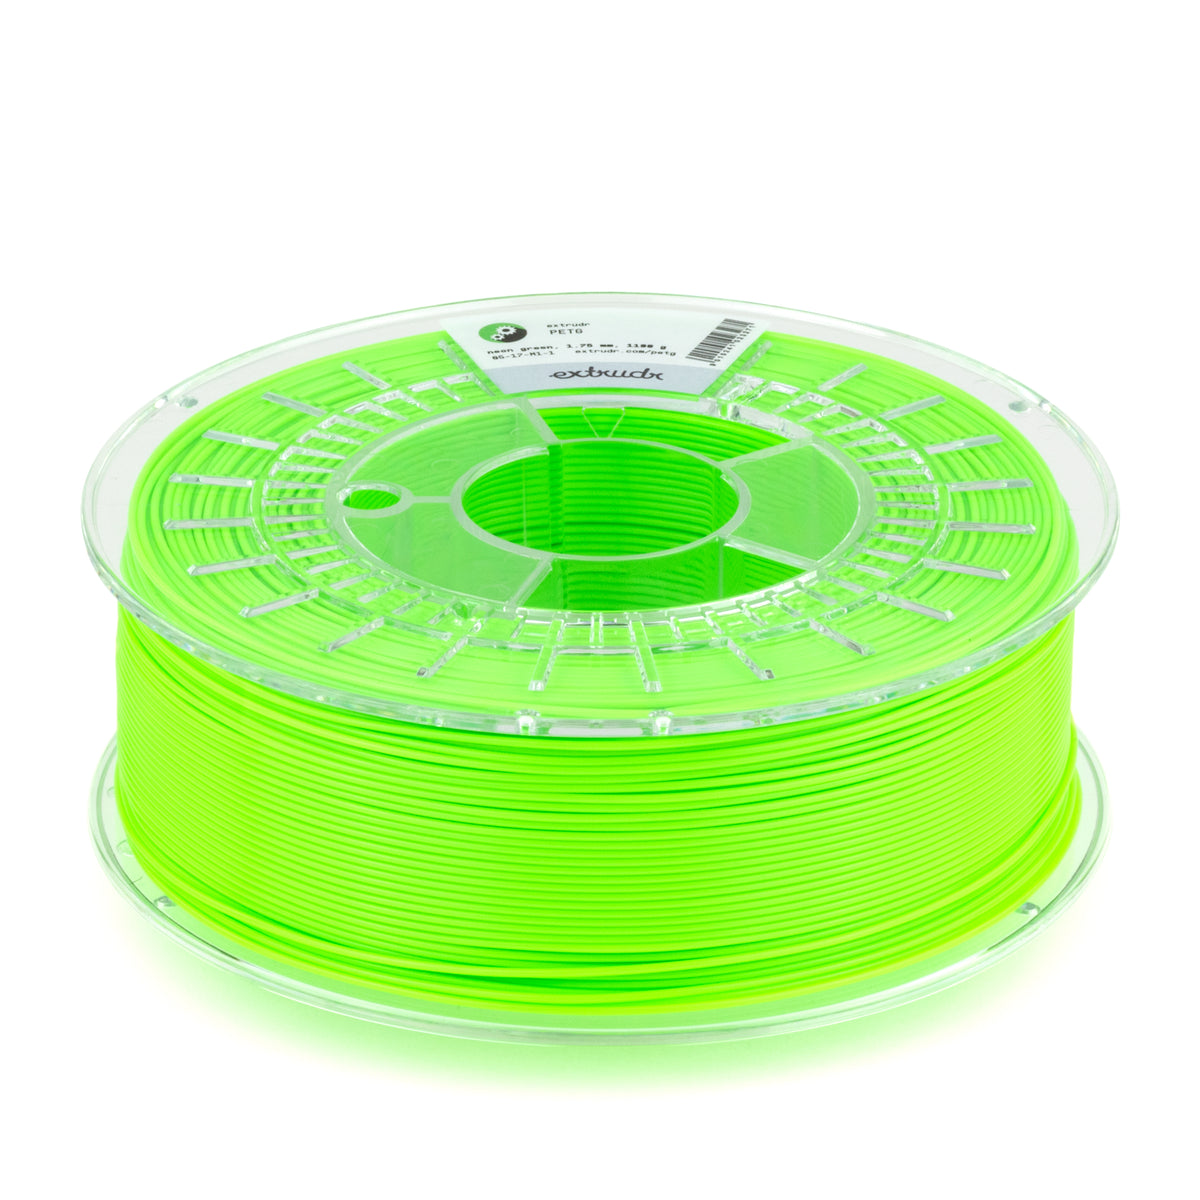 Extrudr PETG - Neongrün [1.75mm] (35,45€/Kg)